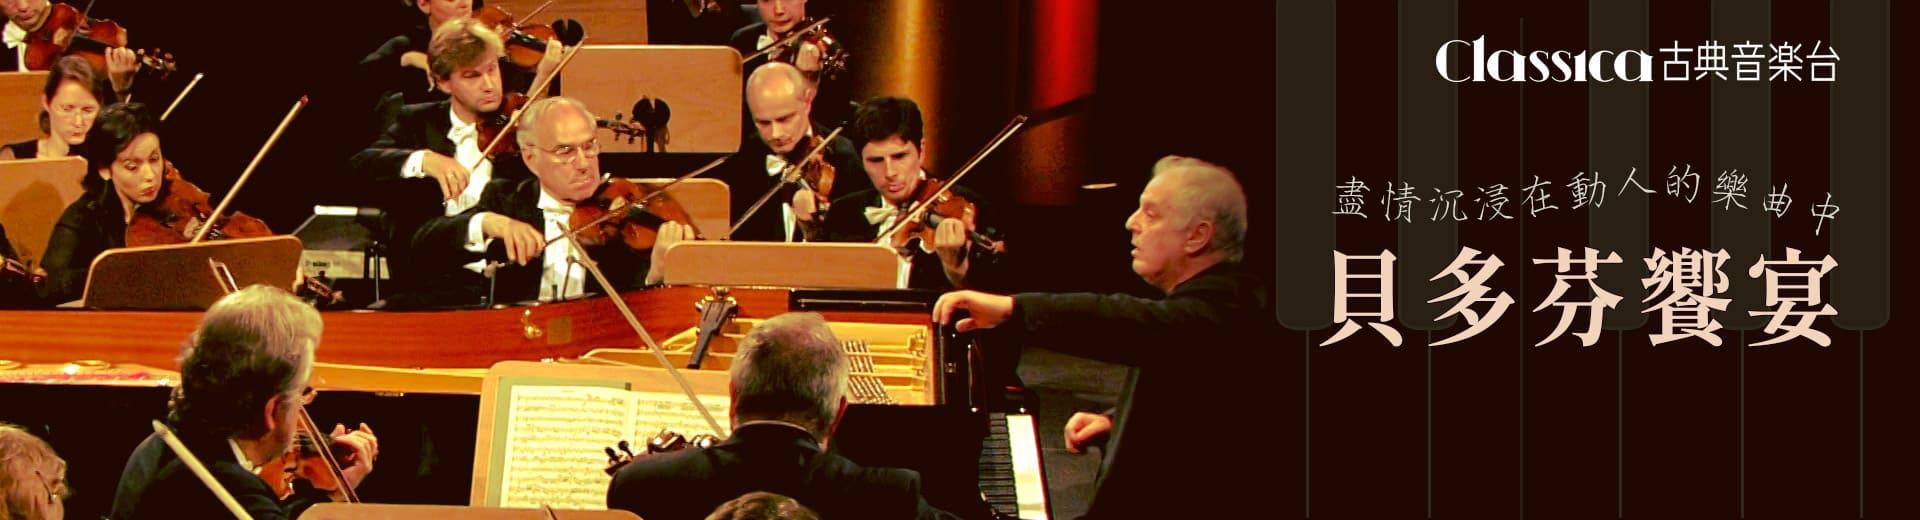 CLASSICA古典音樂台 2024年1月推薦節目